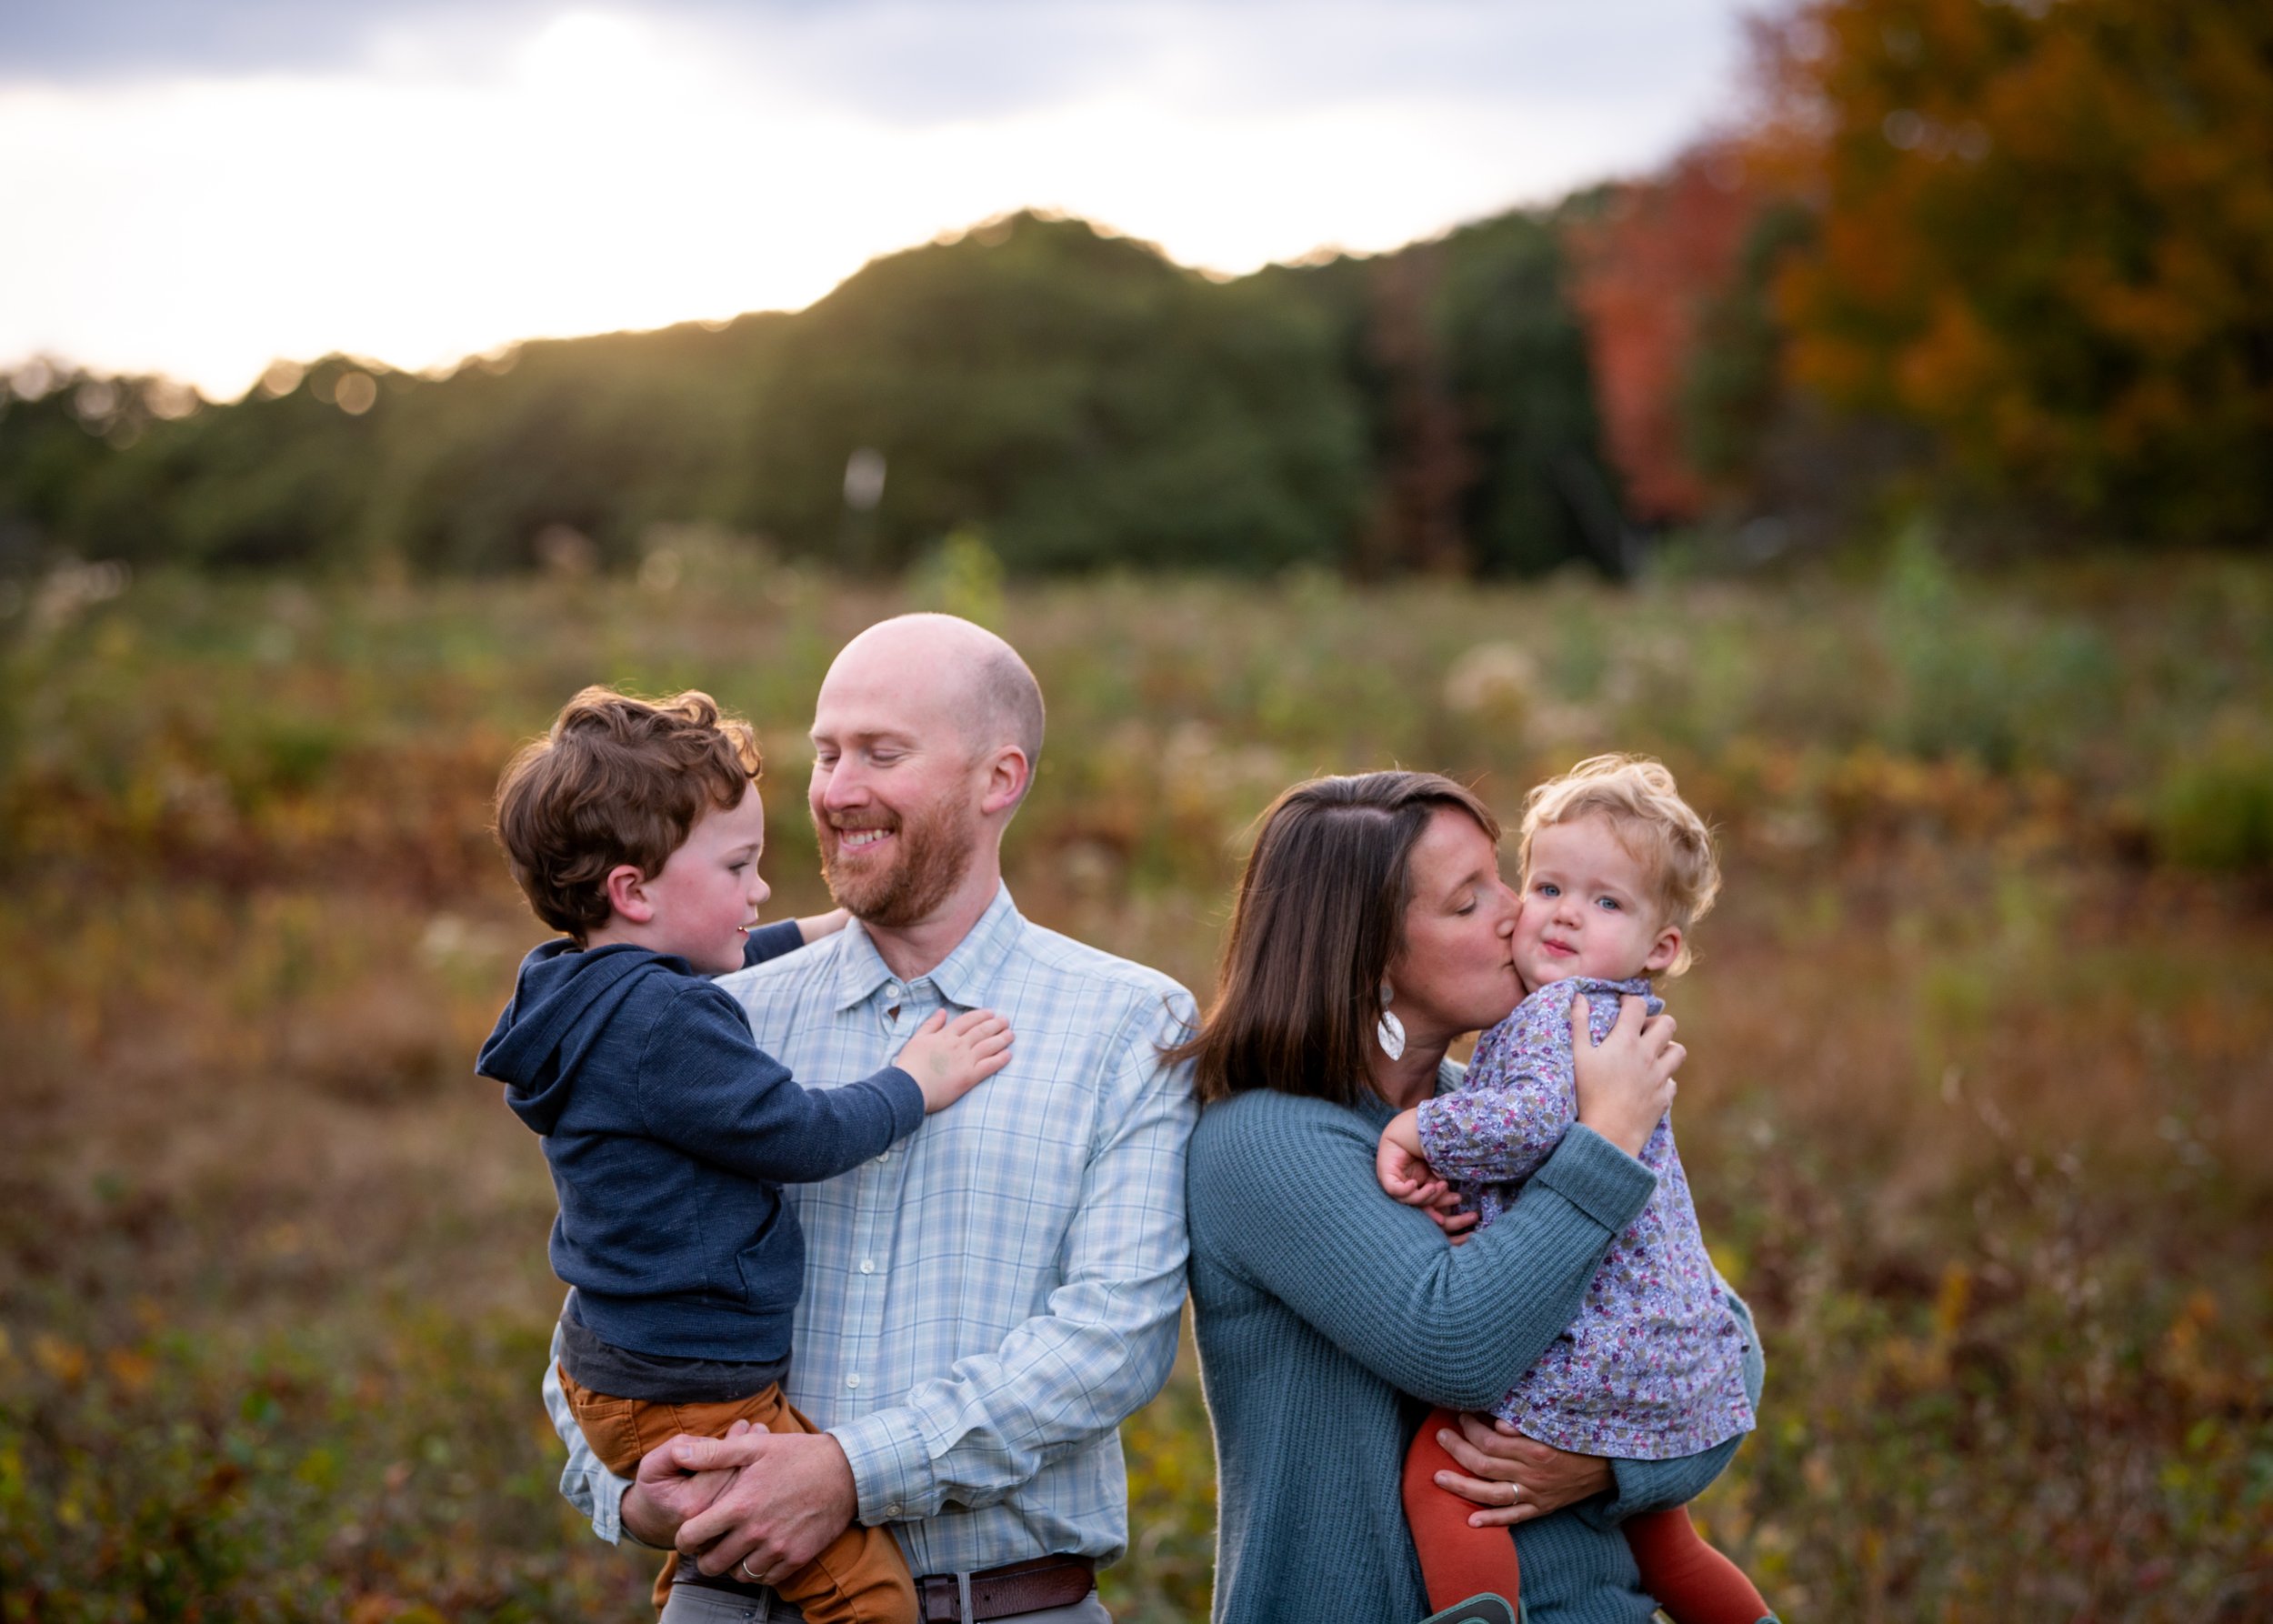 lindsay murphy photography | portland maine family photographer | fall portrait session family.jpg